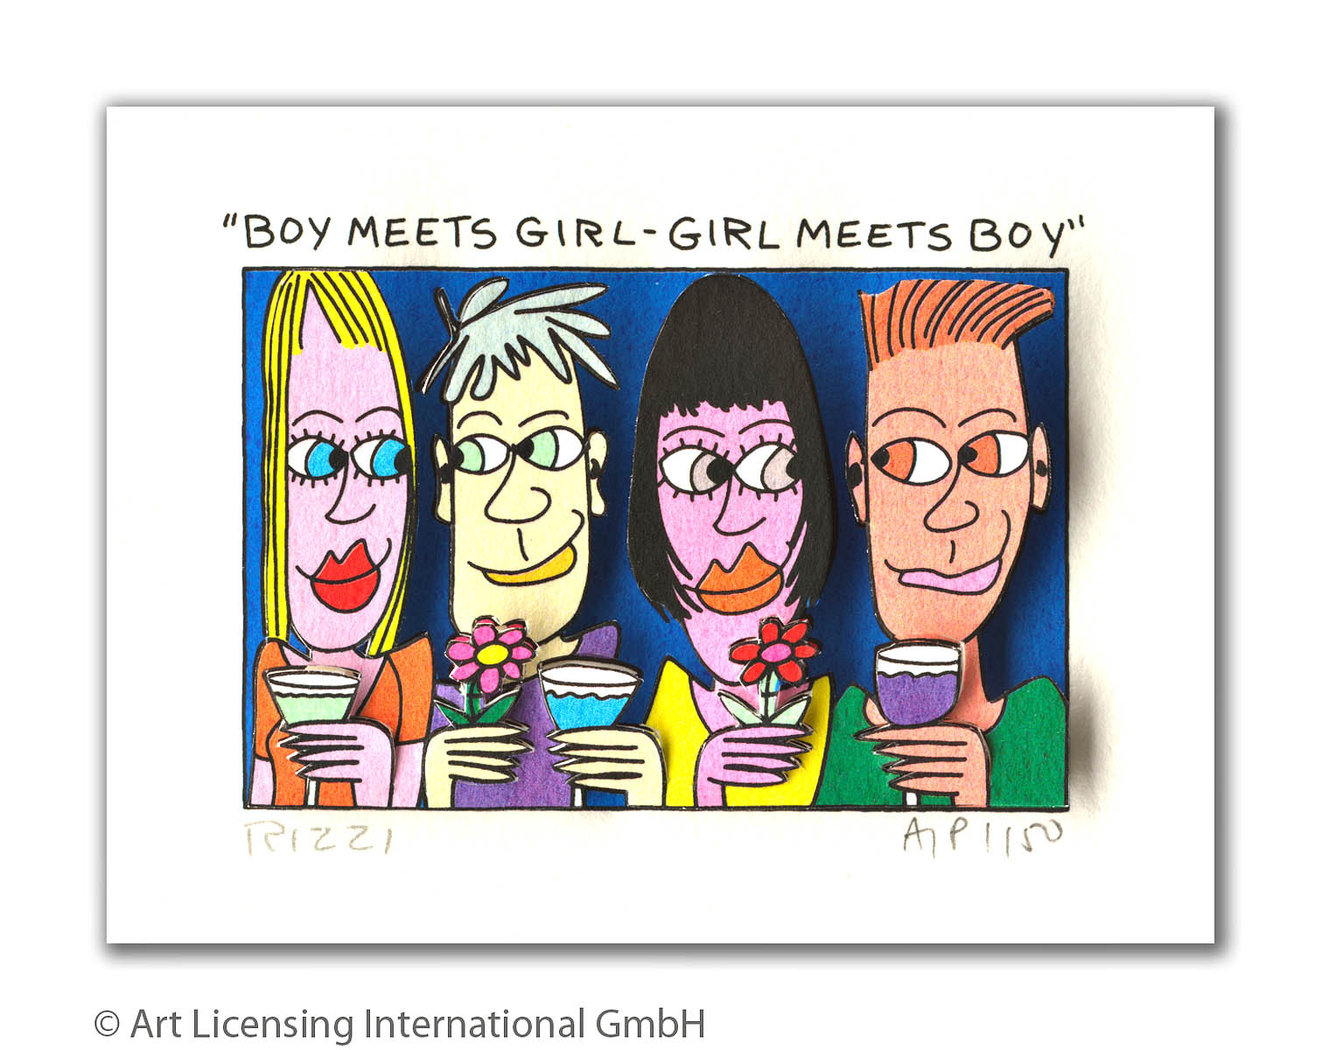 James Rizzi - BOY MEETS GIRL - GIRL MEETS BOY